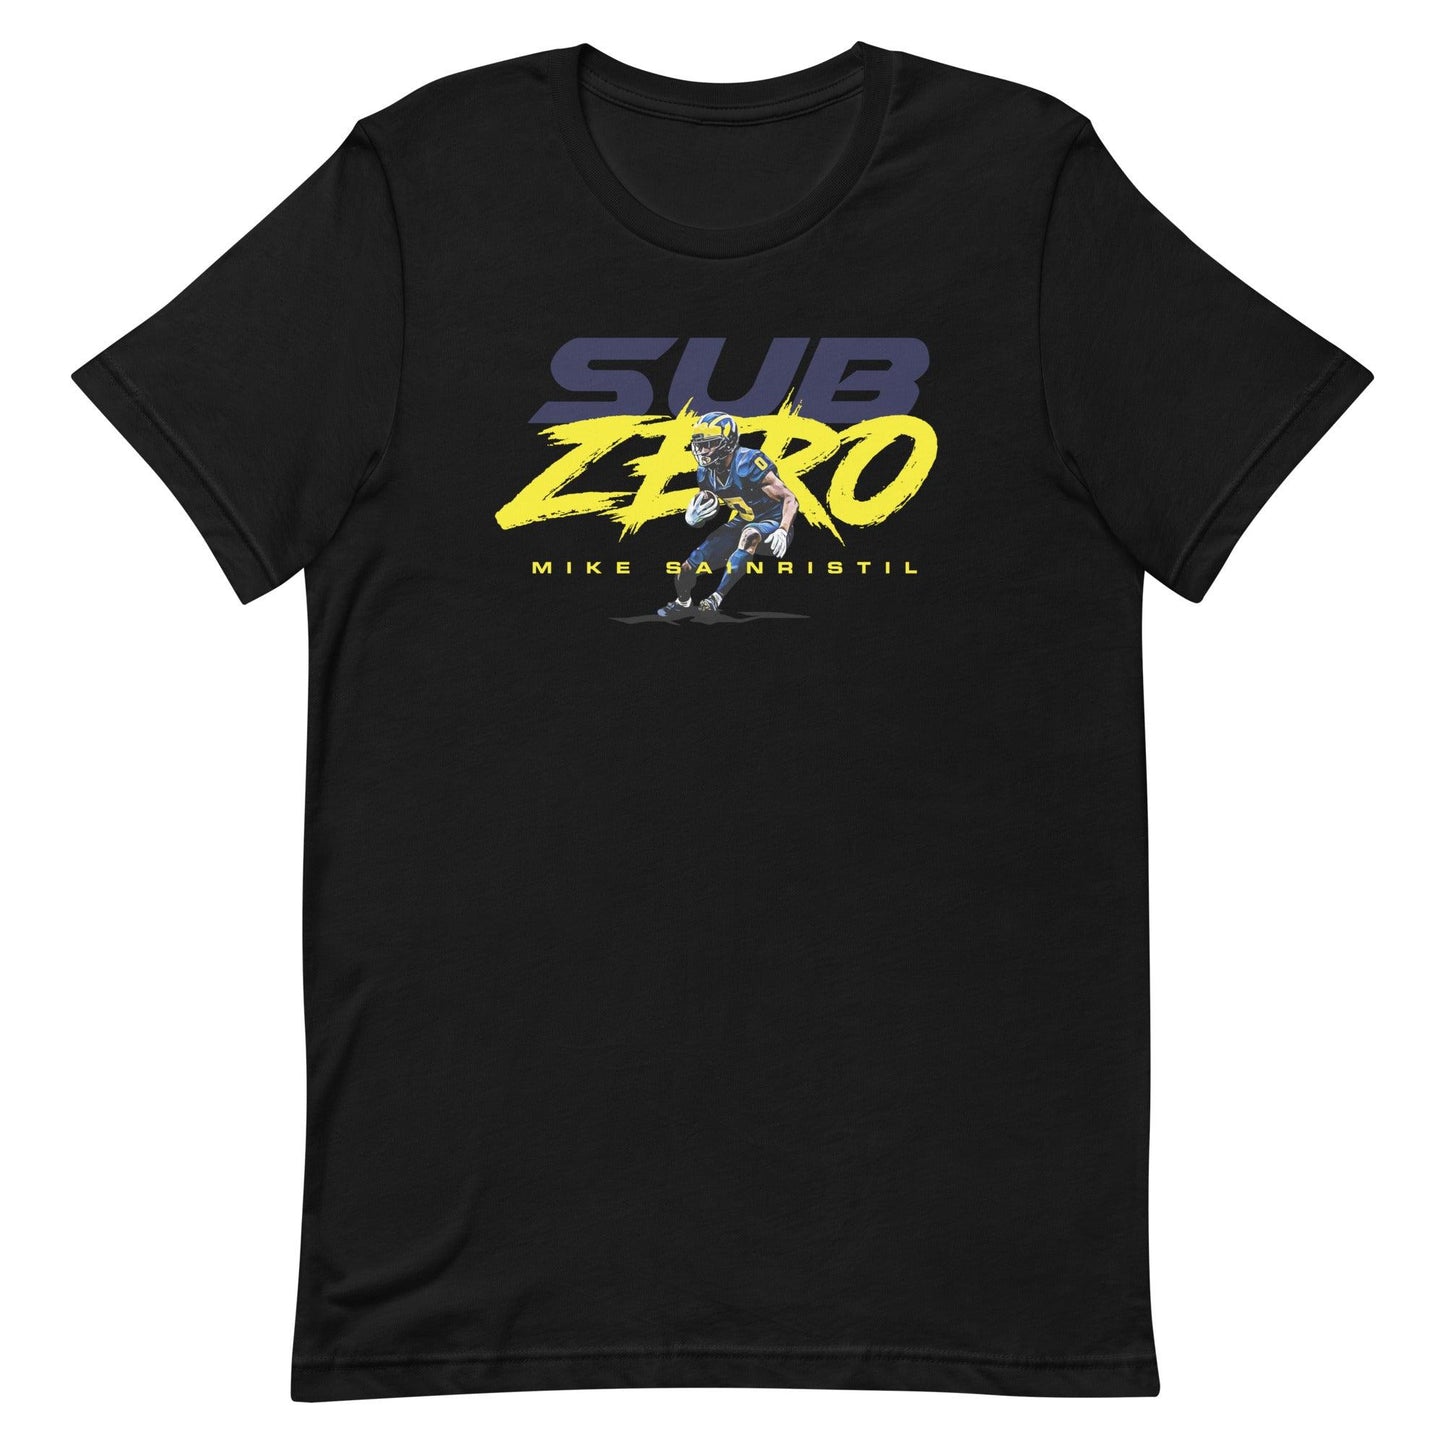 Mike Sainristil "Sub Zero" t-shirt - Fan Arch